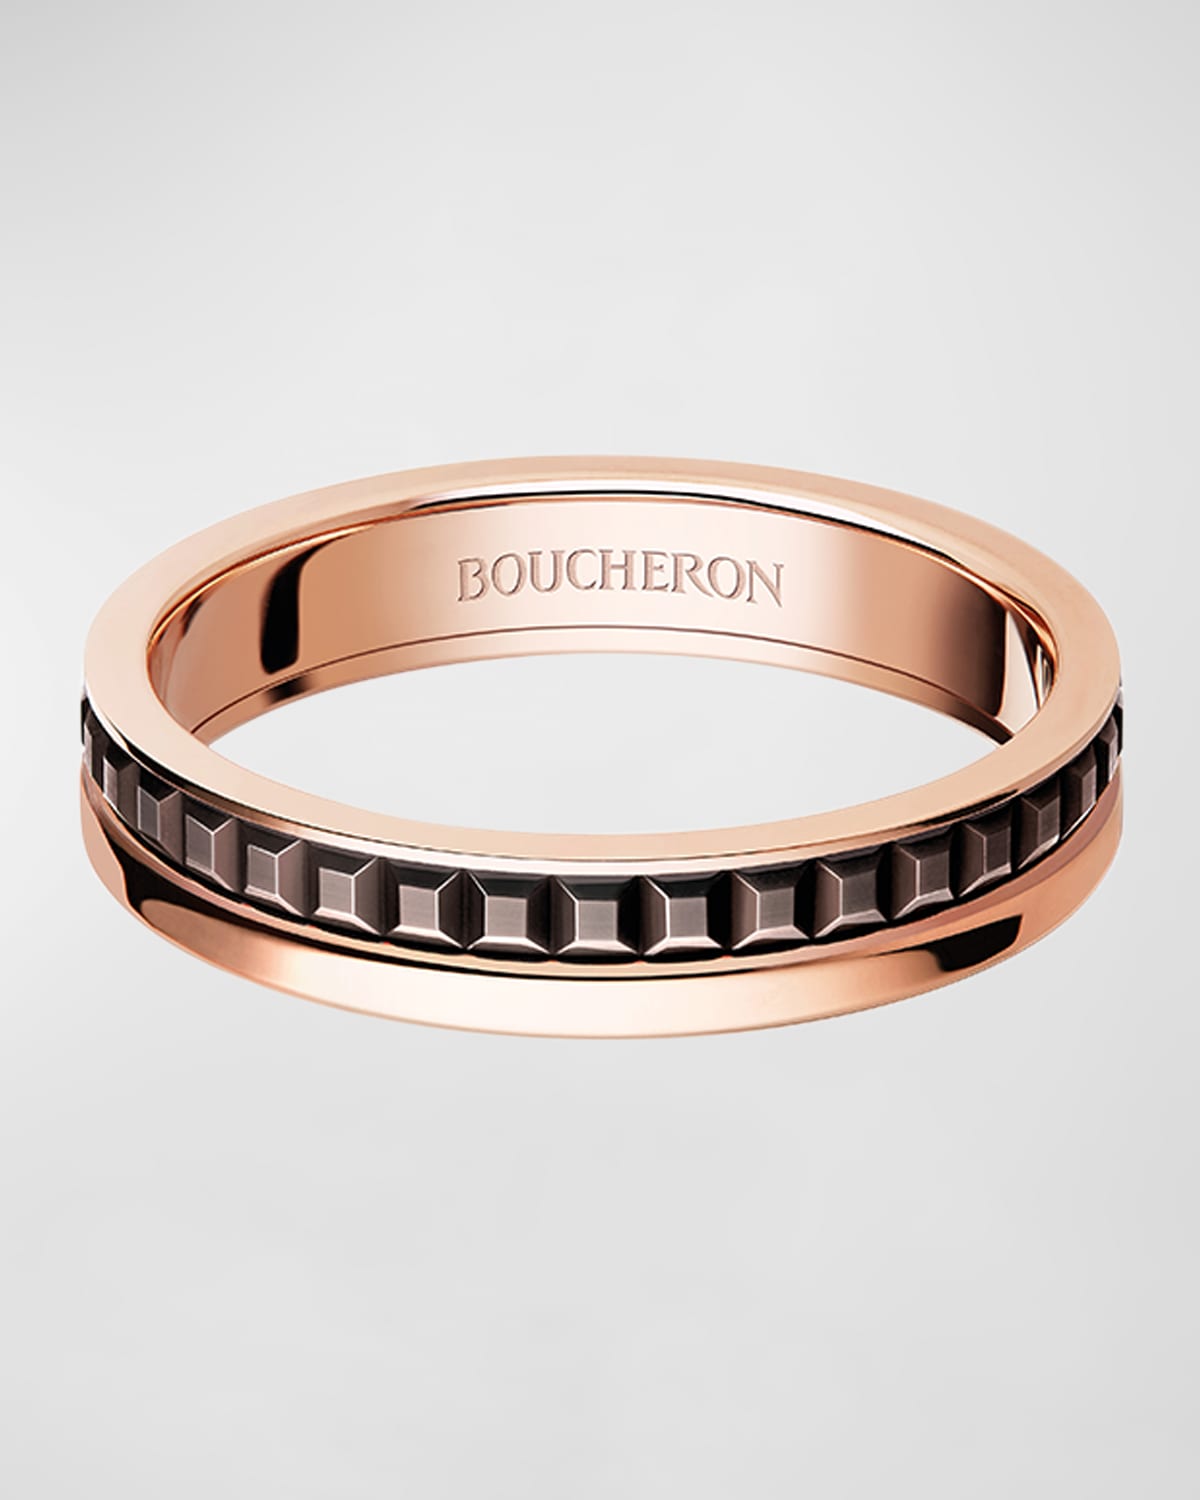 BOUCHERON QUATRE FOLLIES 18K PINK GOLD AND BROWN PVD WEDDING BAND RING